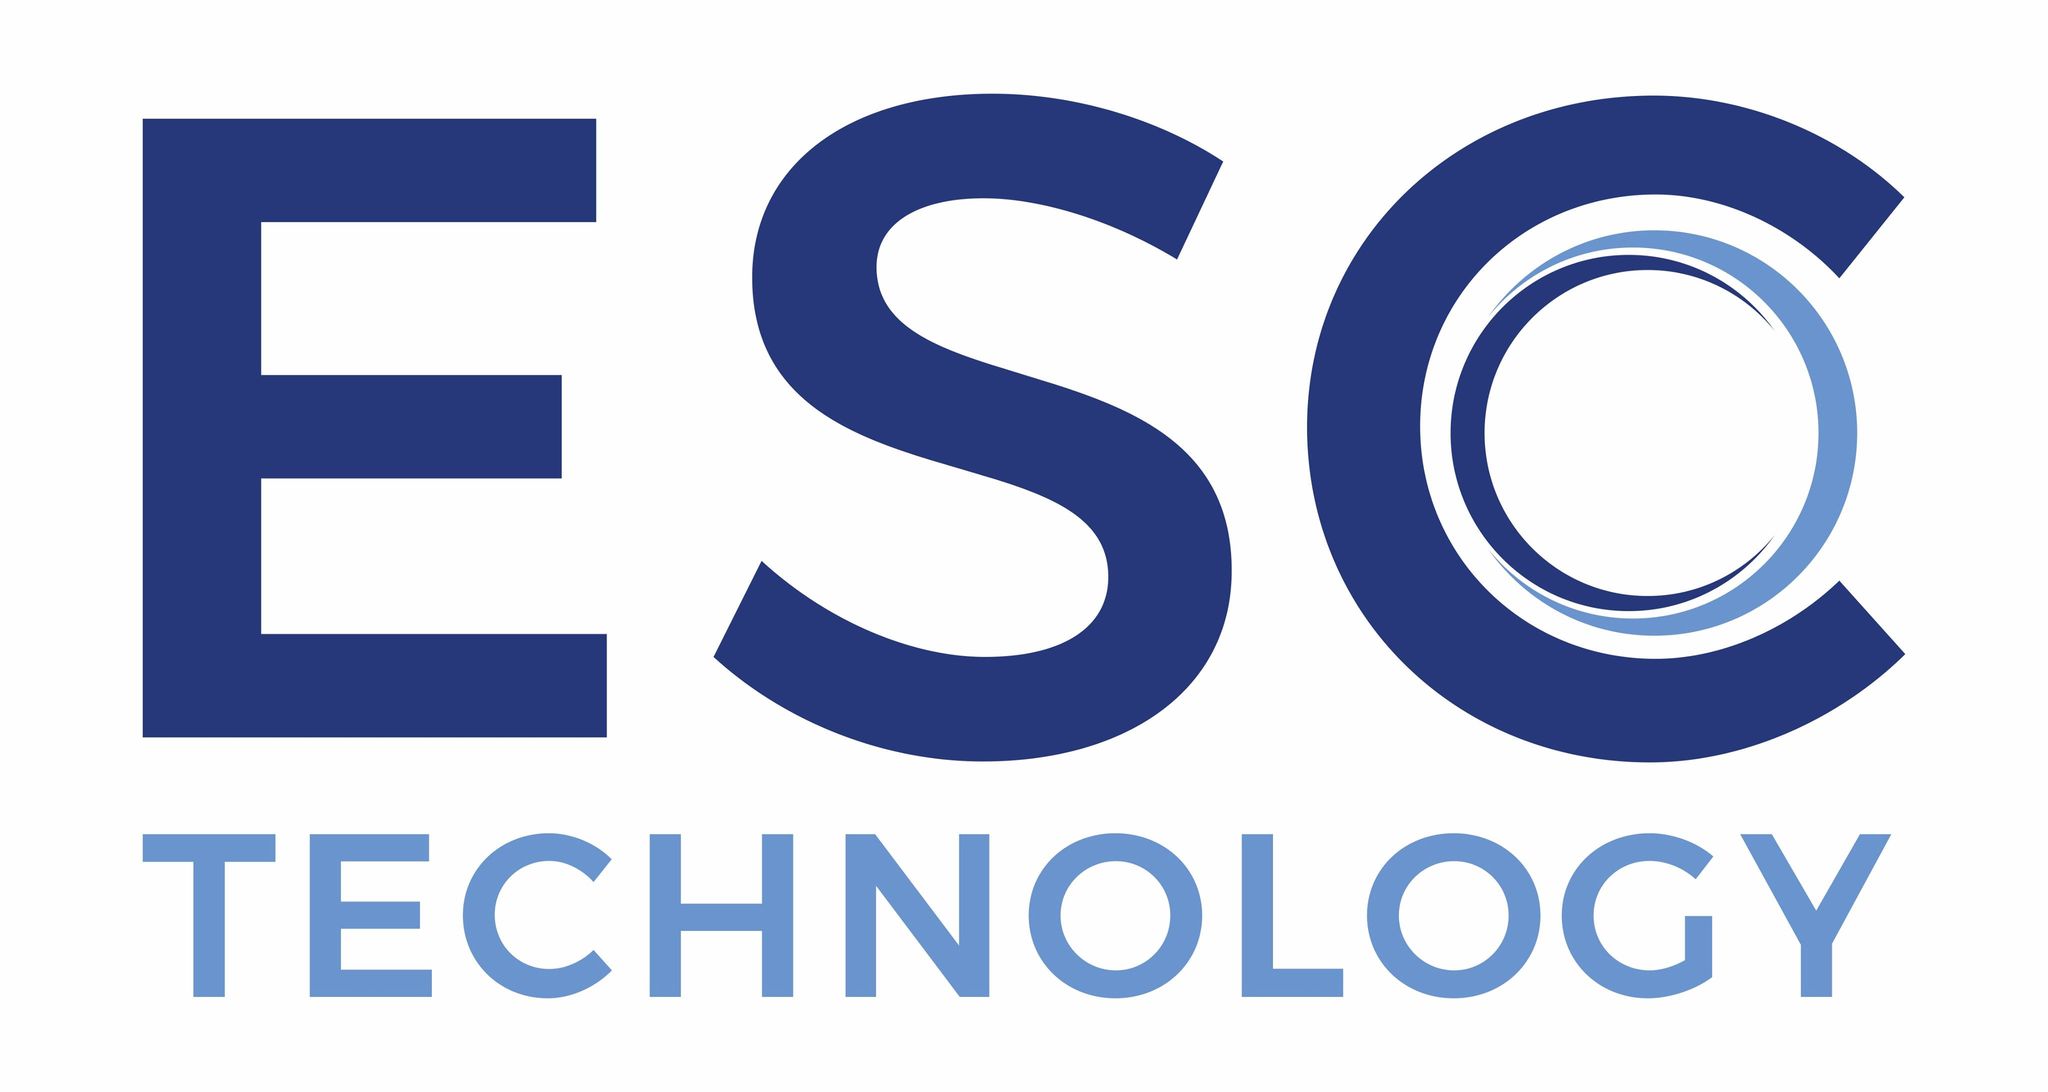 ESC Technology Limited